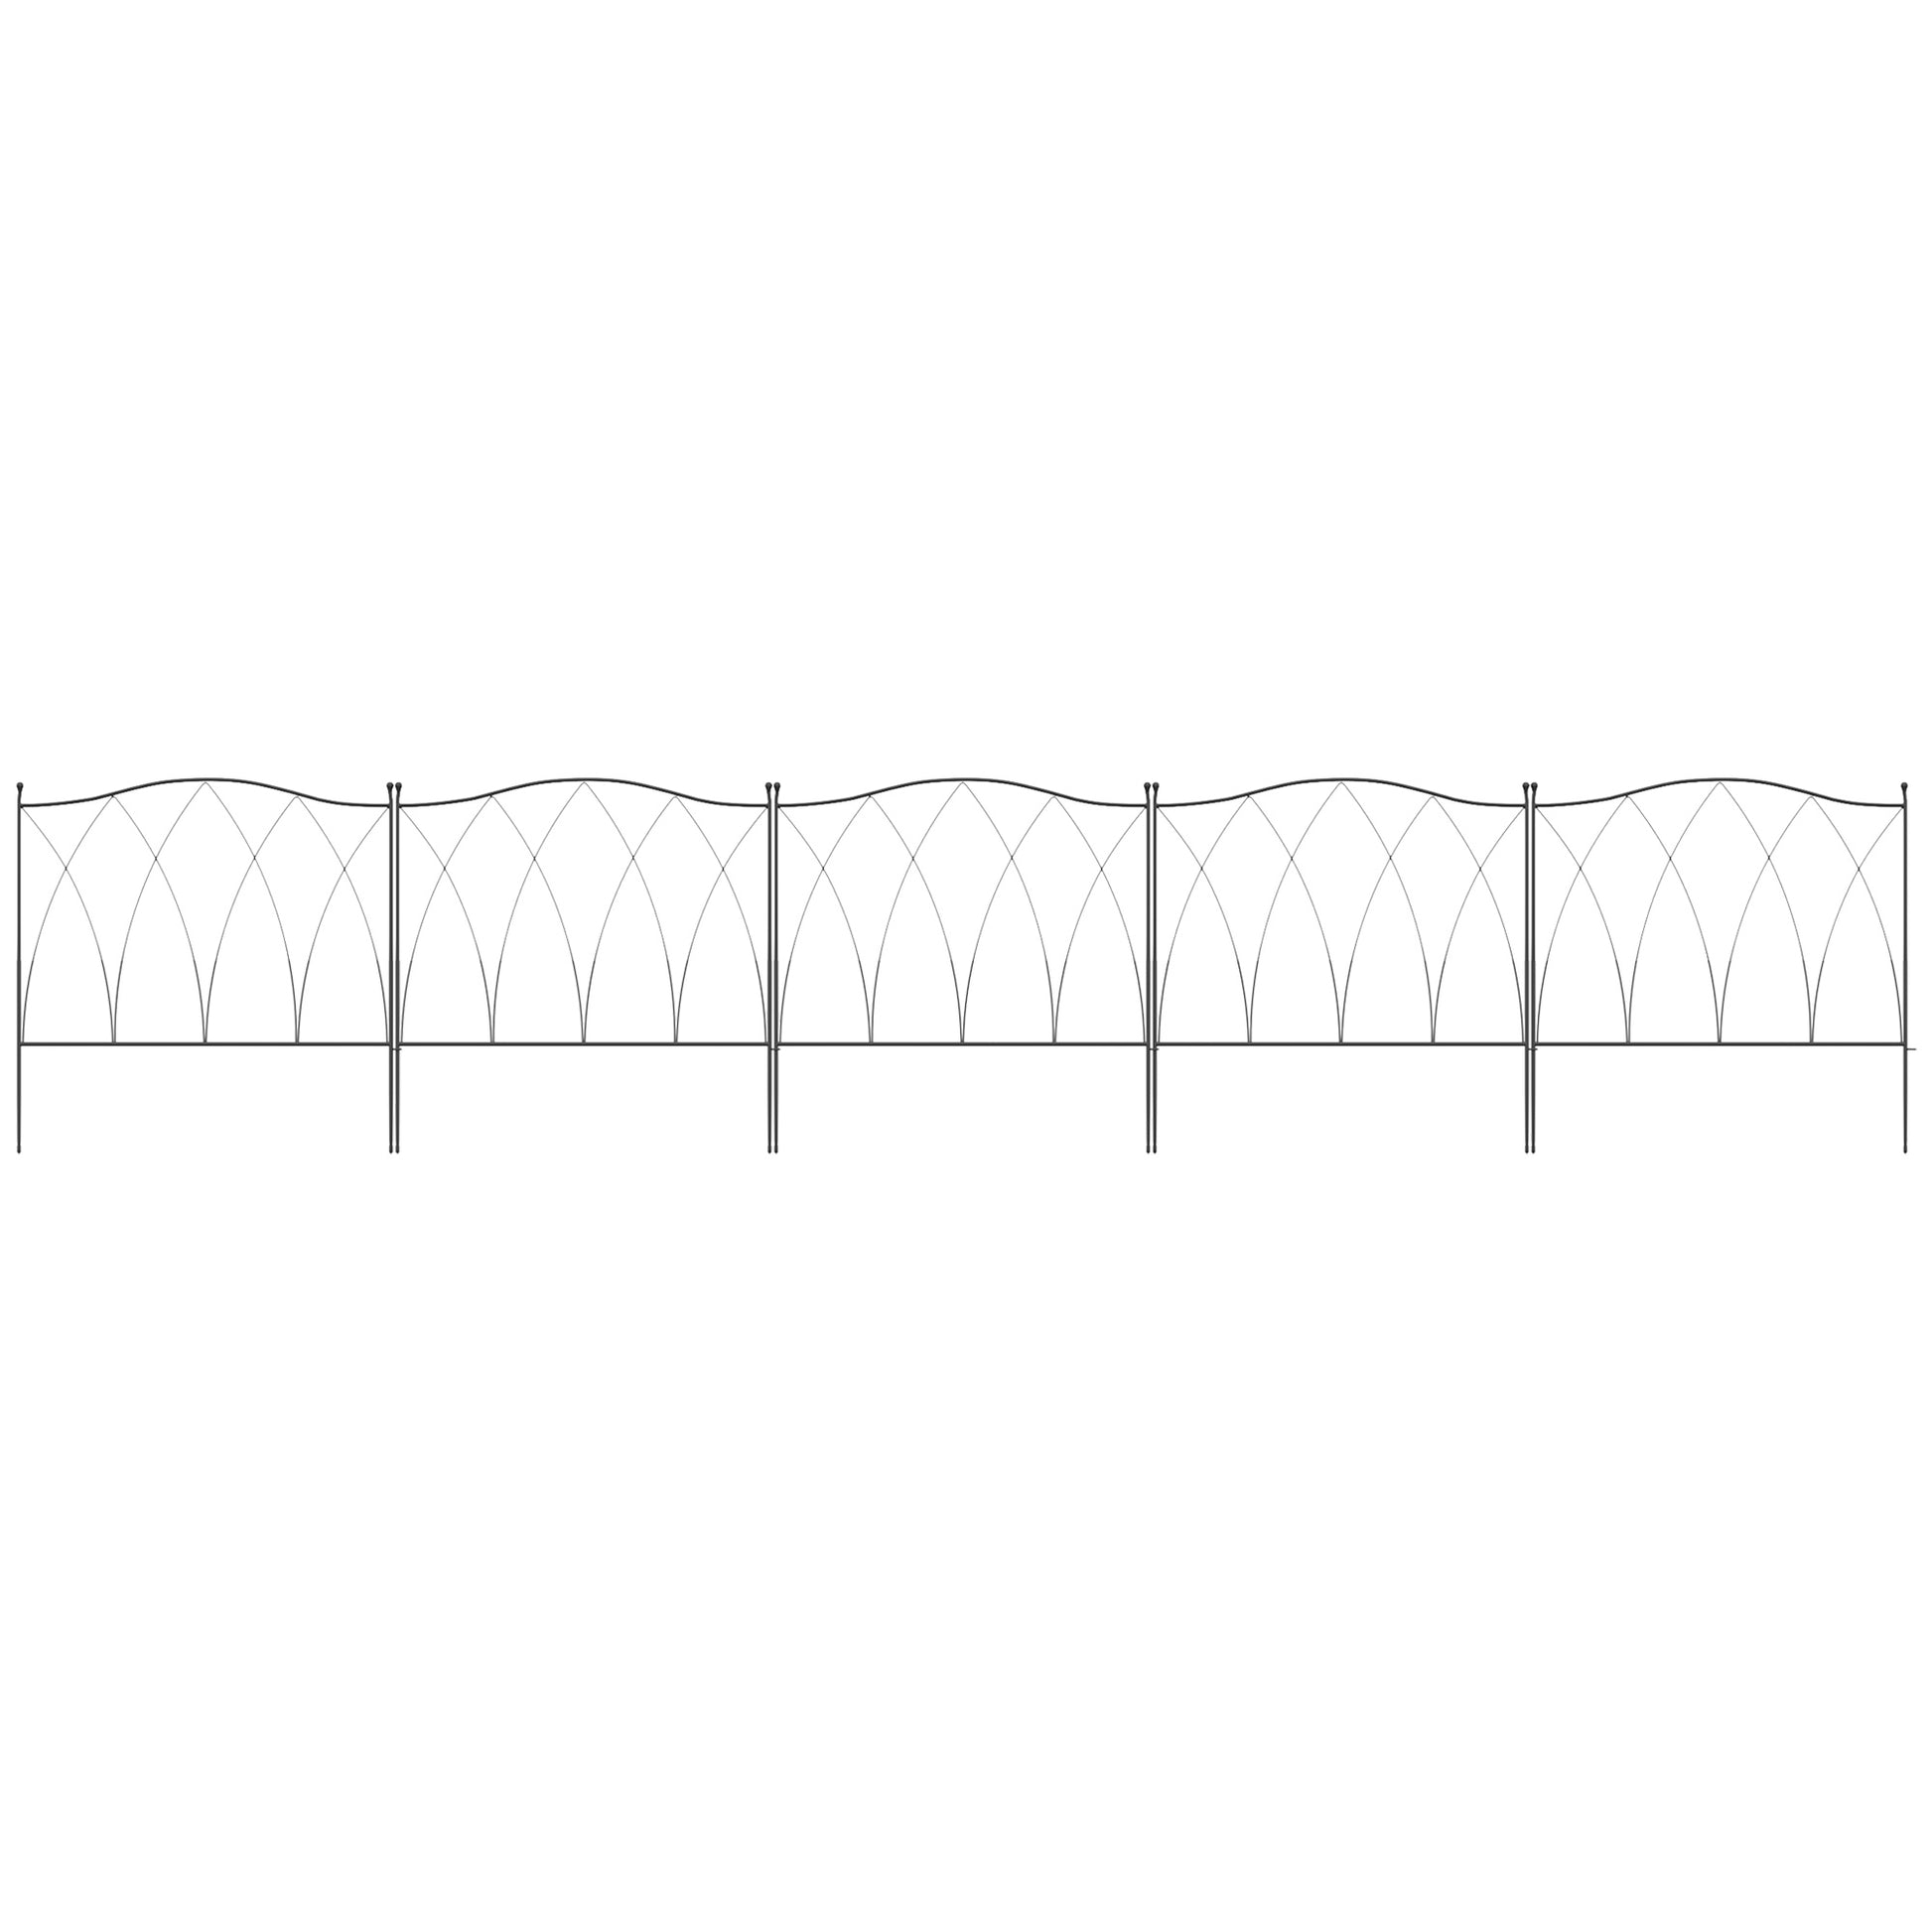 5PCs Outdoor Garden Fence Panels, Metal Wire Landscape Flower Bed Border Edging Animal Barrier, 24" x 10', Black - Gallery Canada